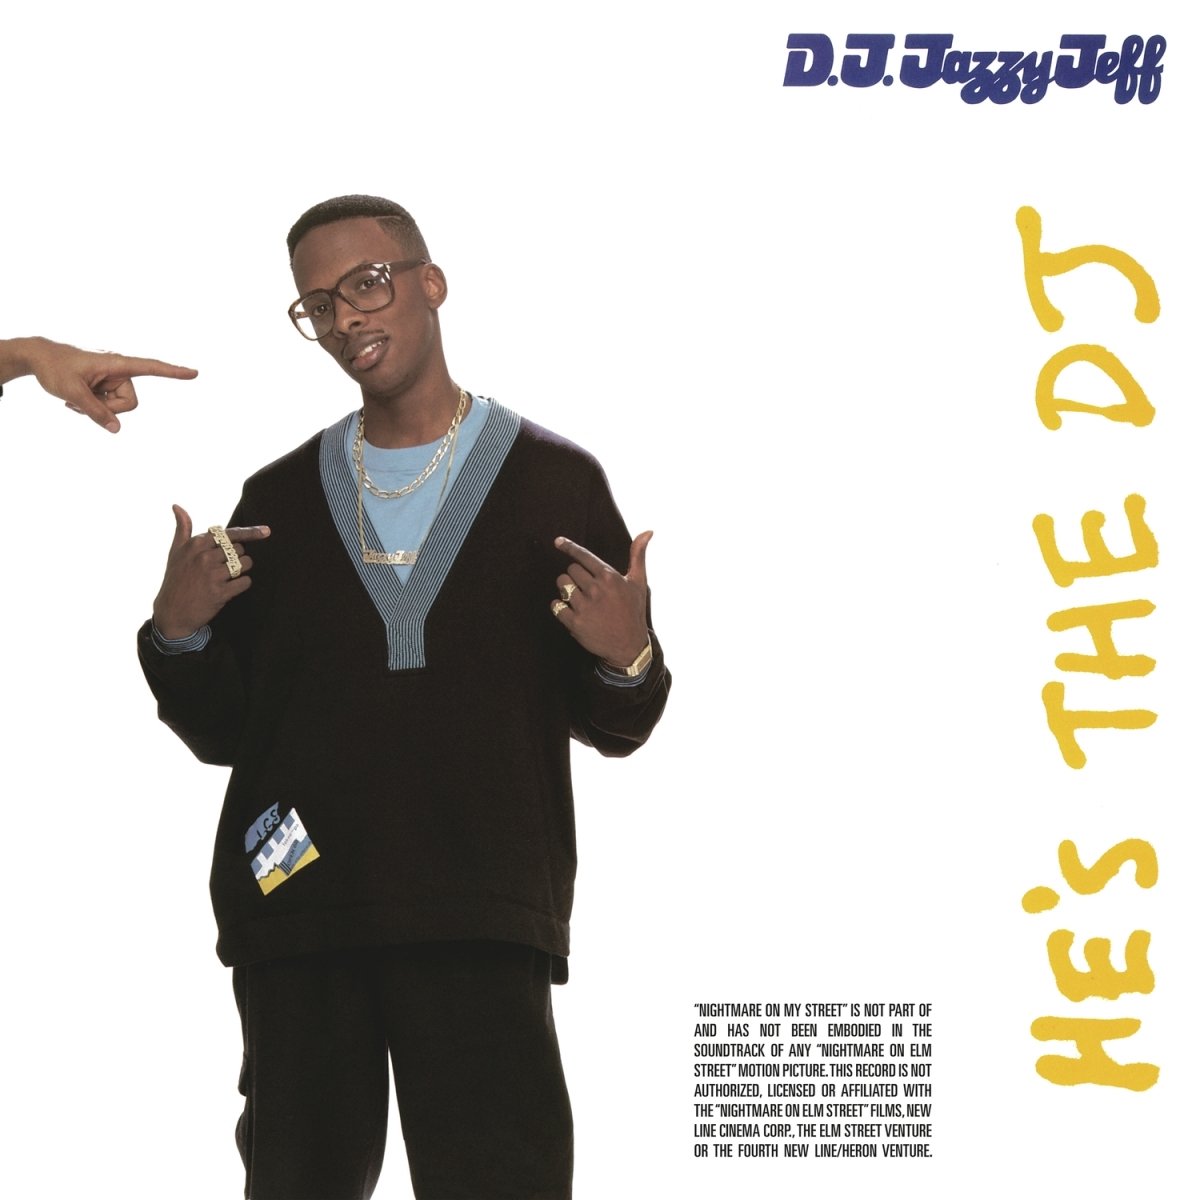 He's The Dj, I'm The Rapper - DJ Jazzy Jeff & The Fresh Prince